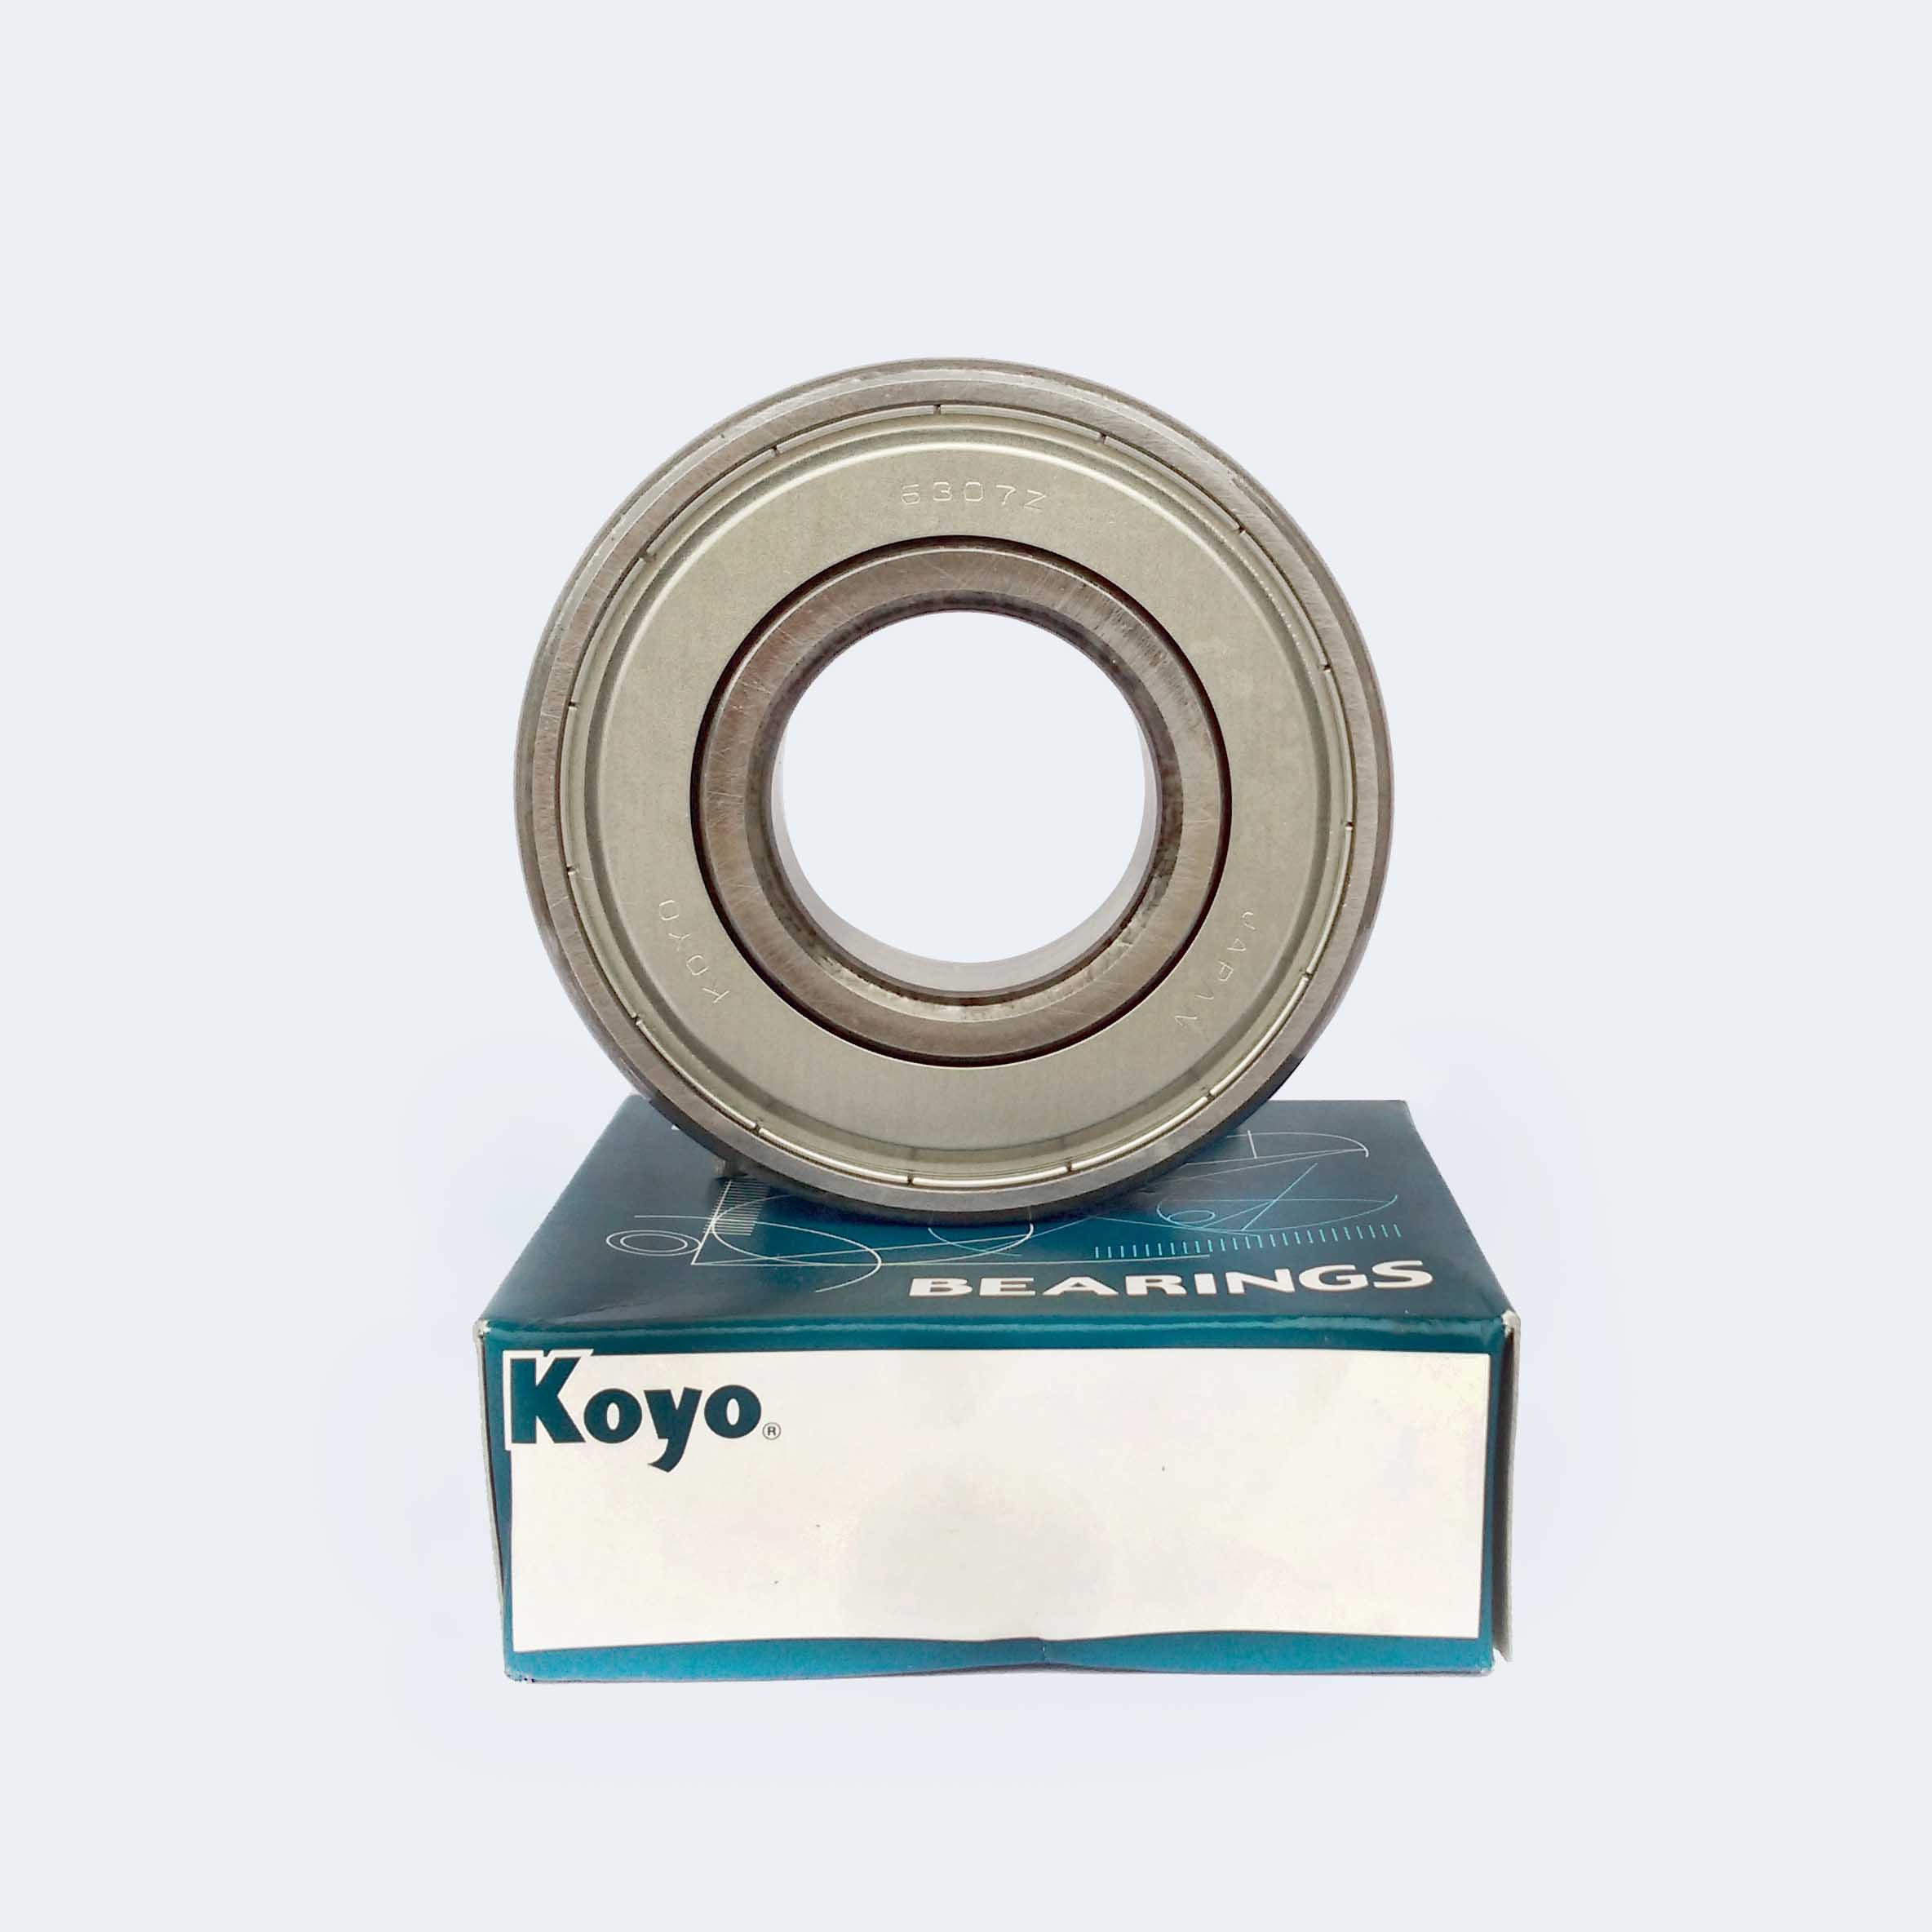 KOYO圓柱滾子軸承,NU1040型號參數,原裝進口軸承銷售